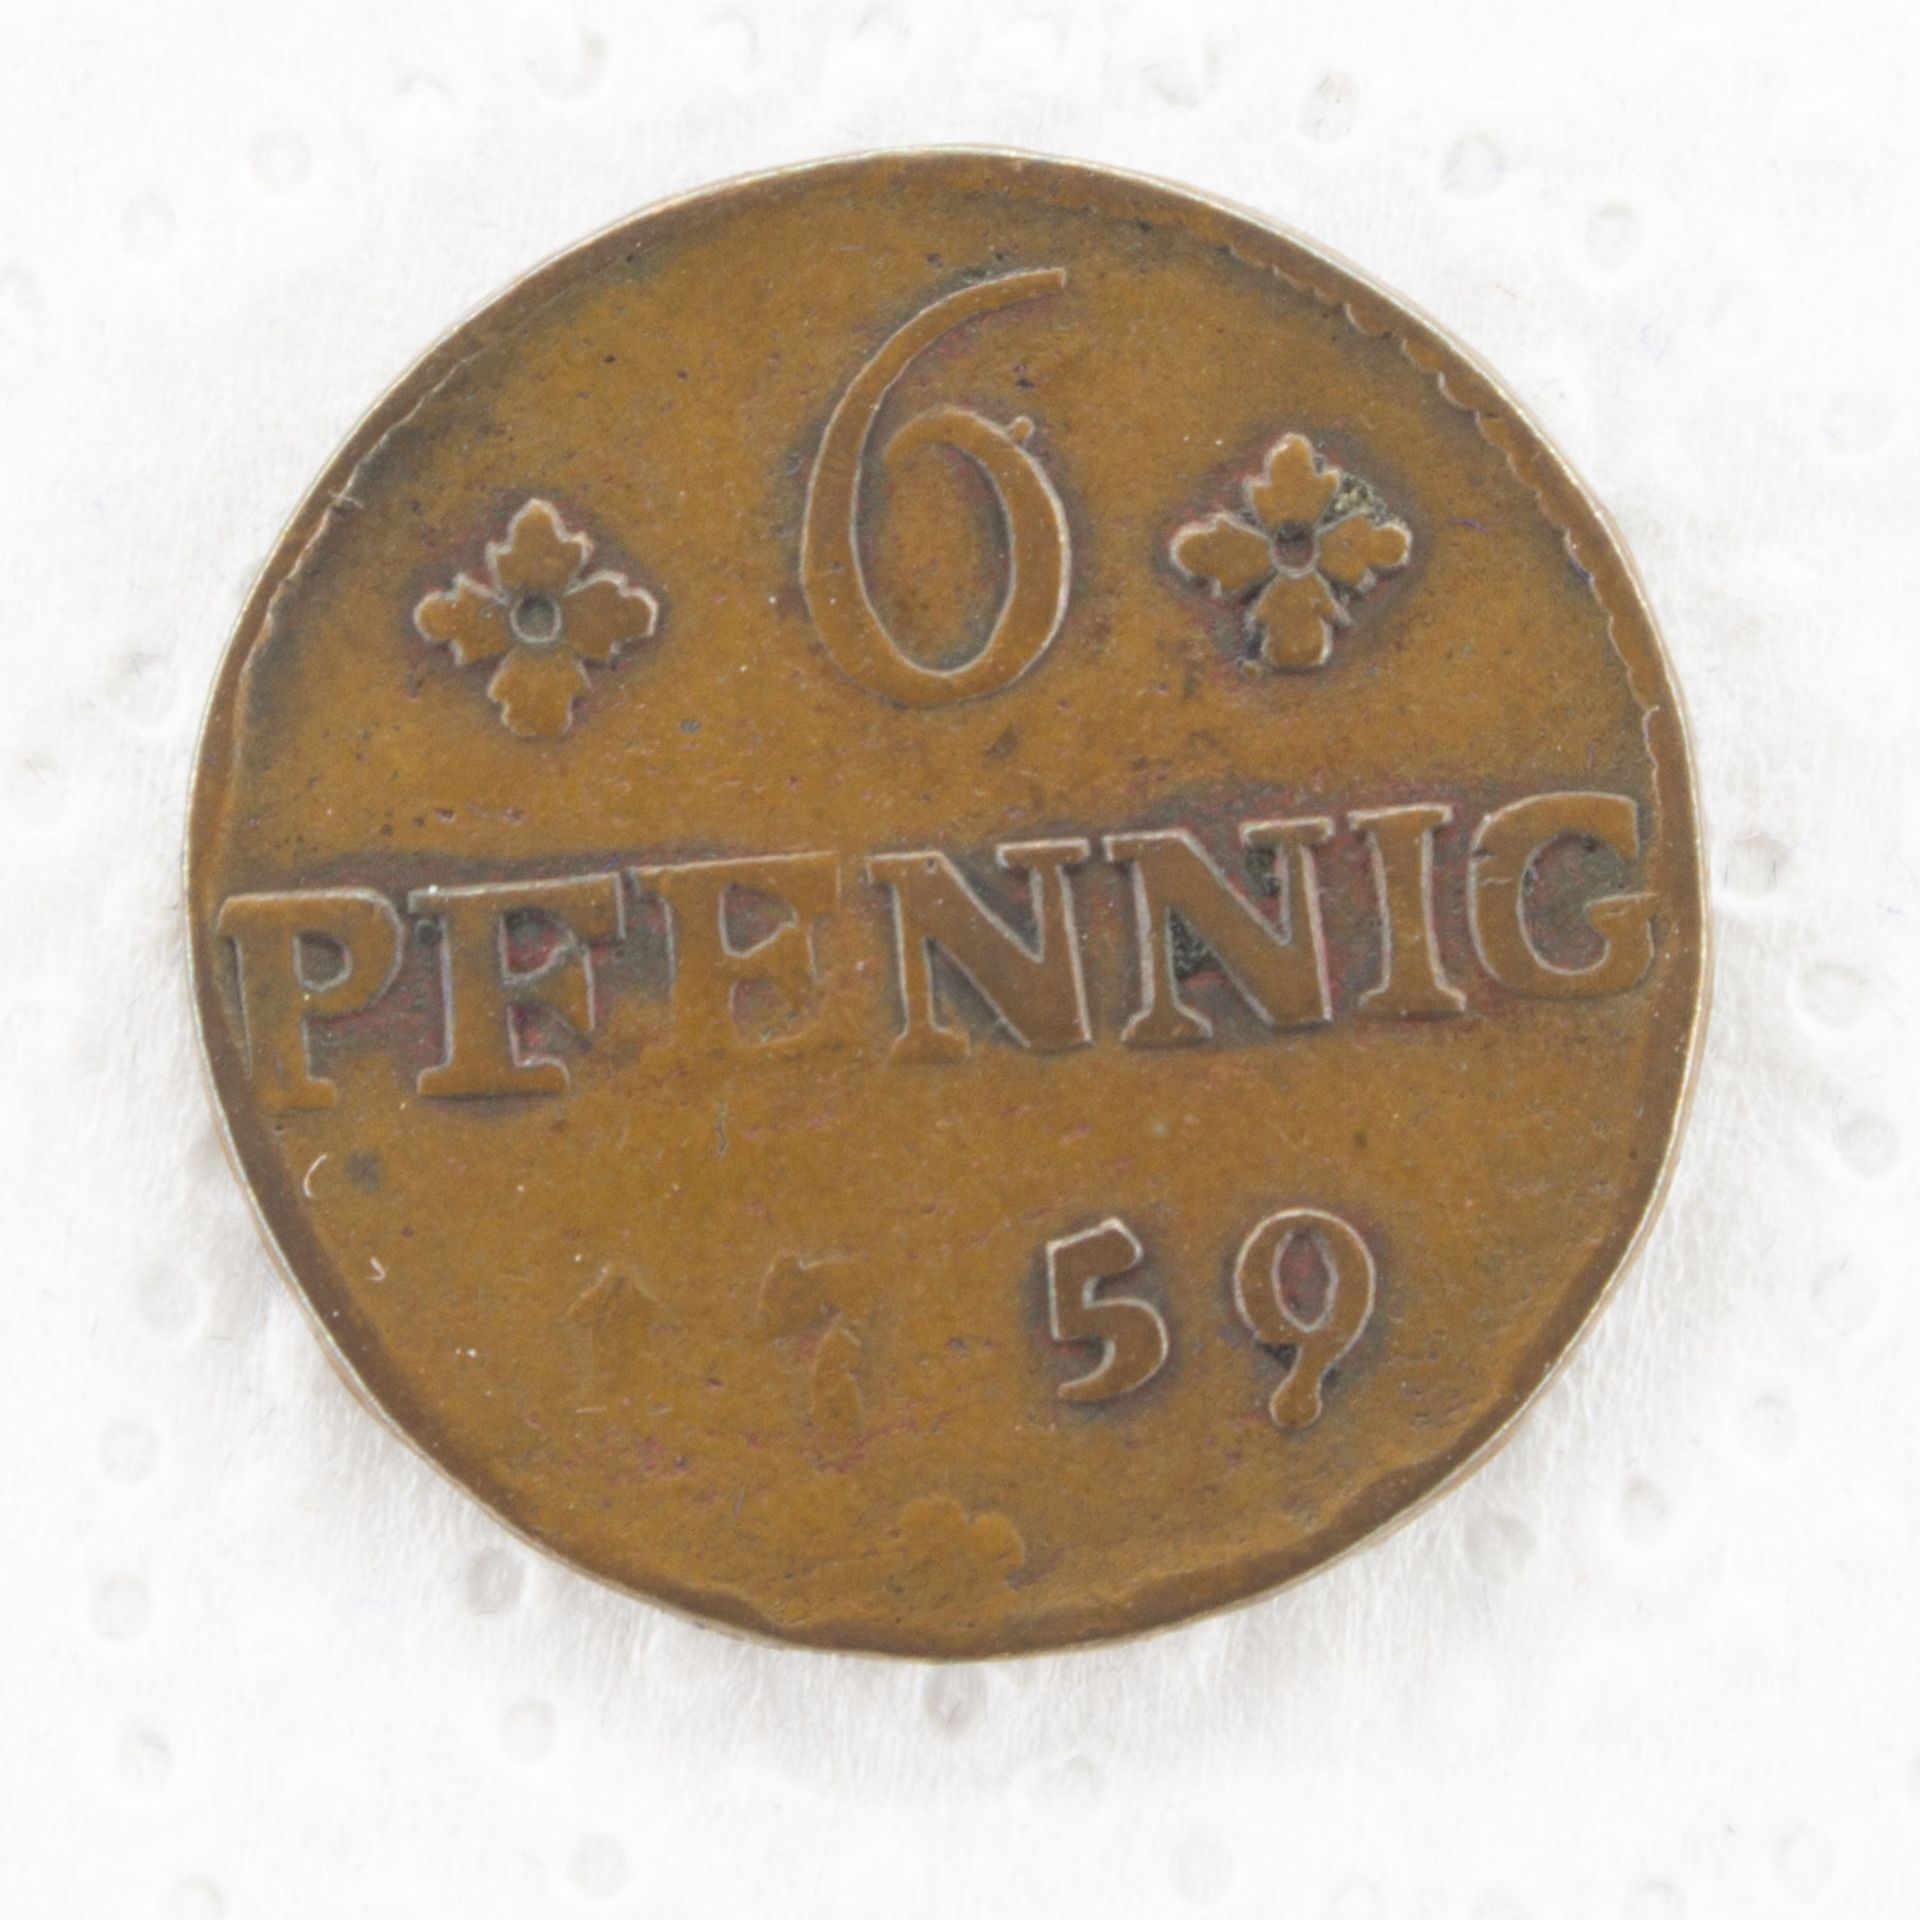 6 Pfennig - Image 2 of 2